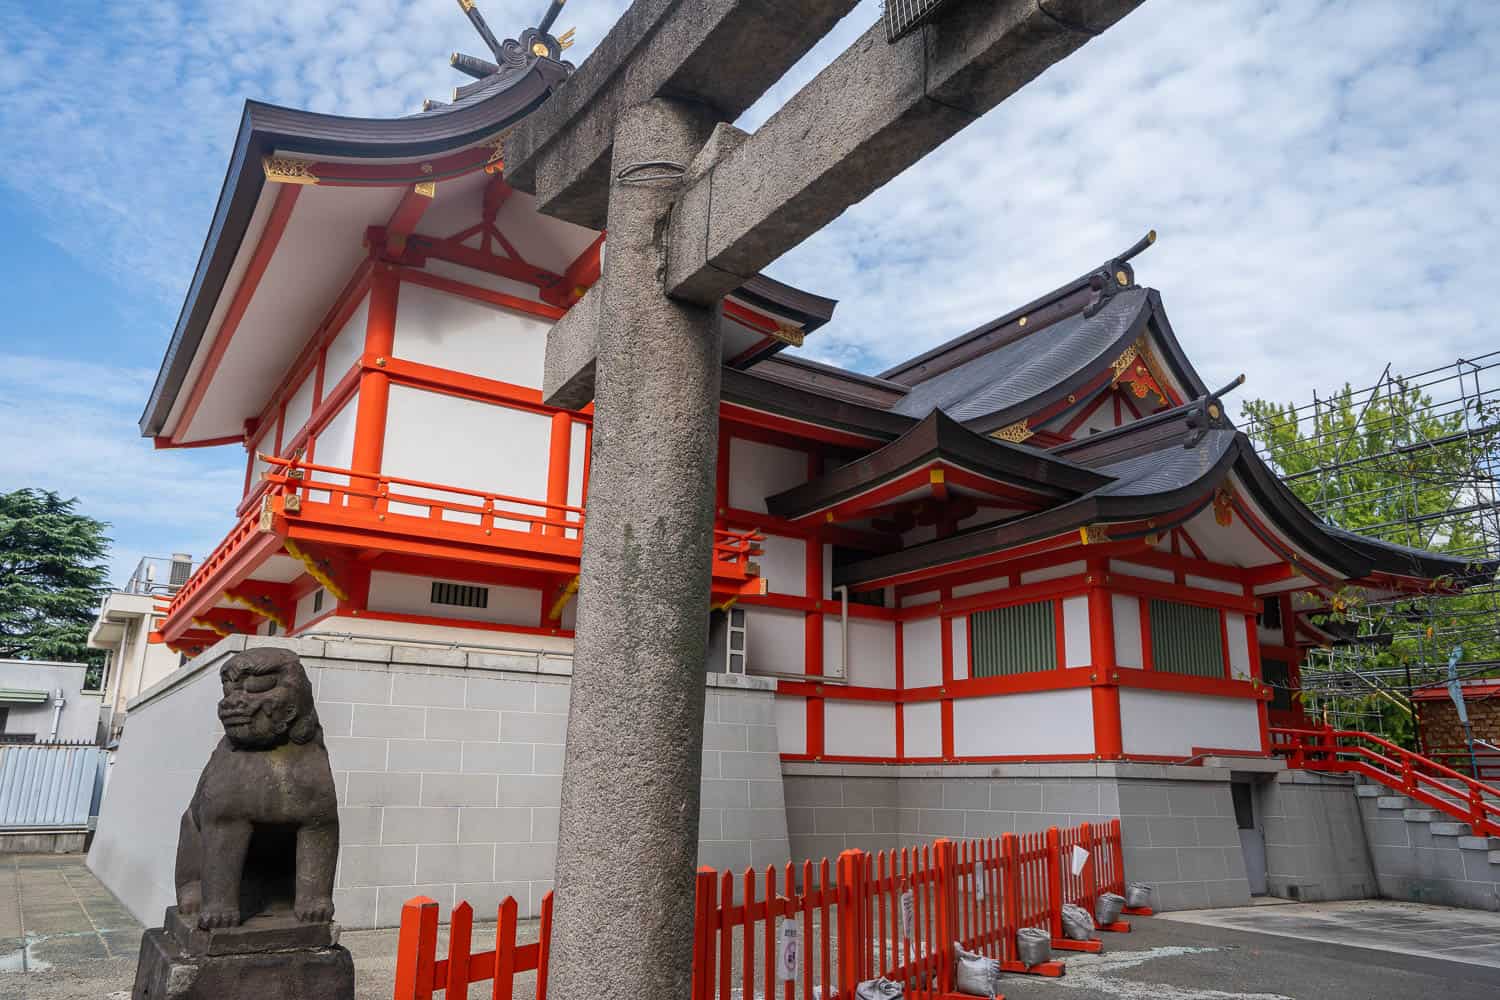 The torii gate and red main building of Hanazono Shrine in Shinjuku, Tokyo